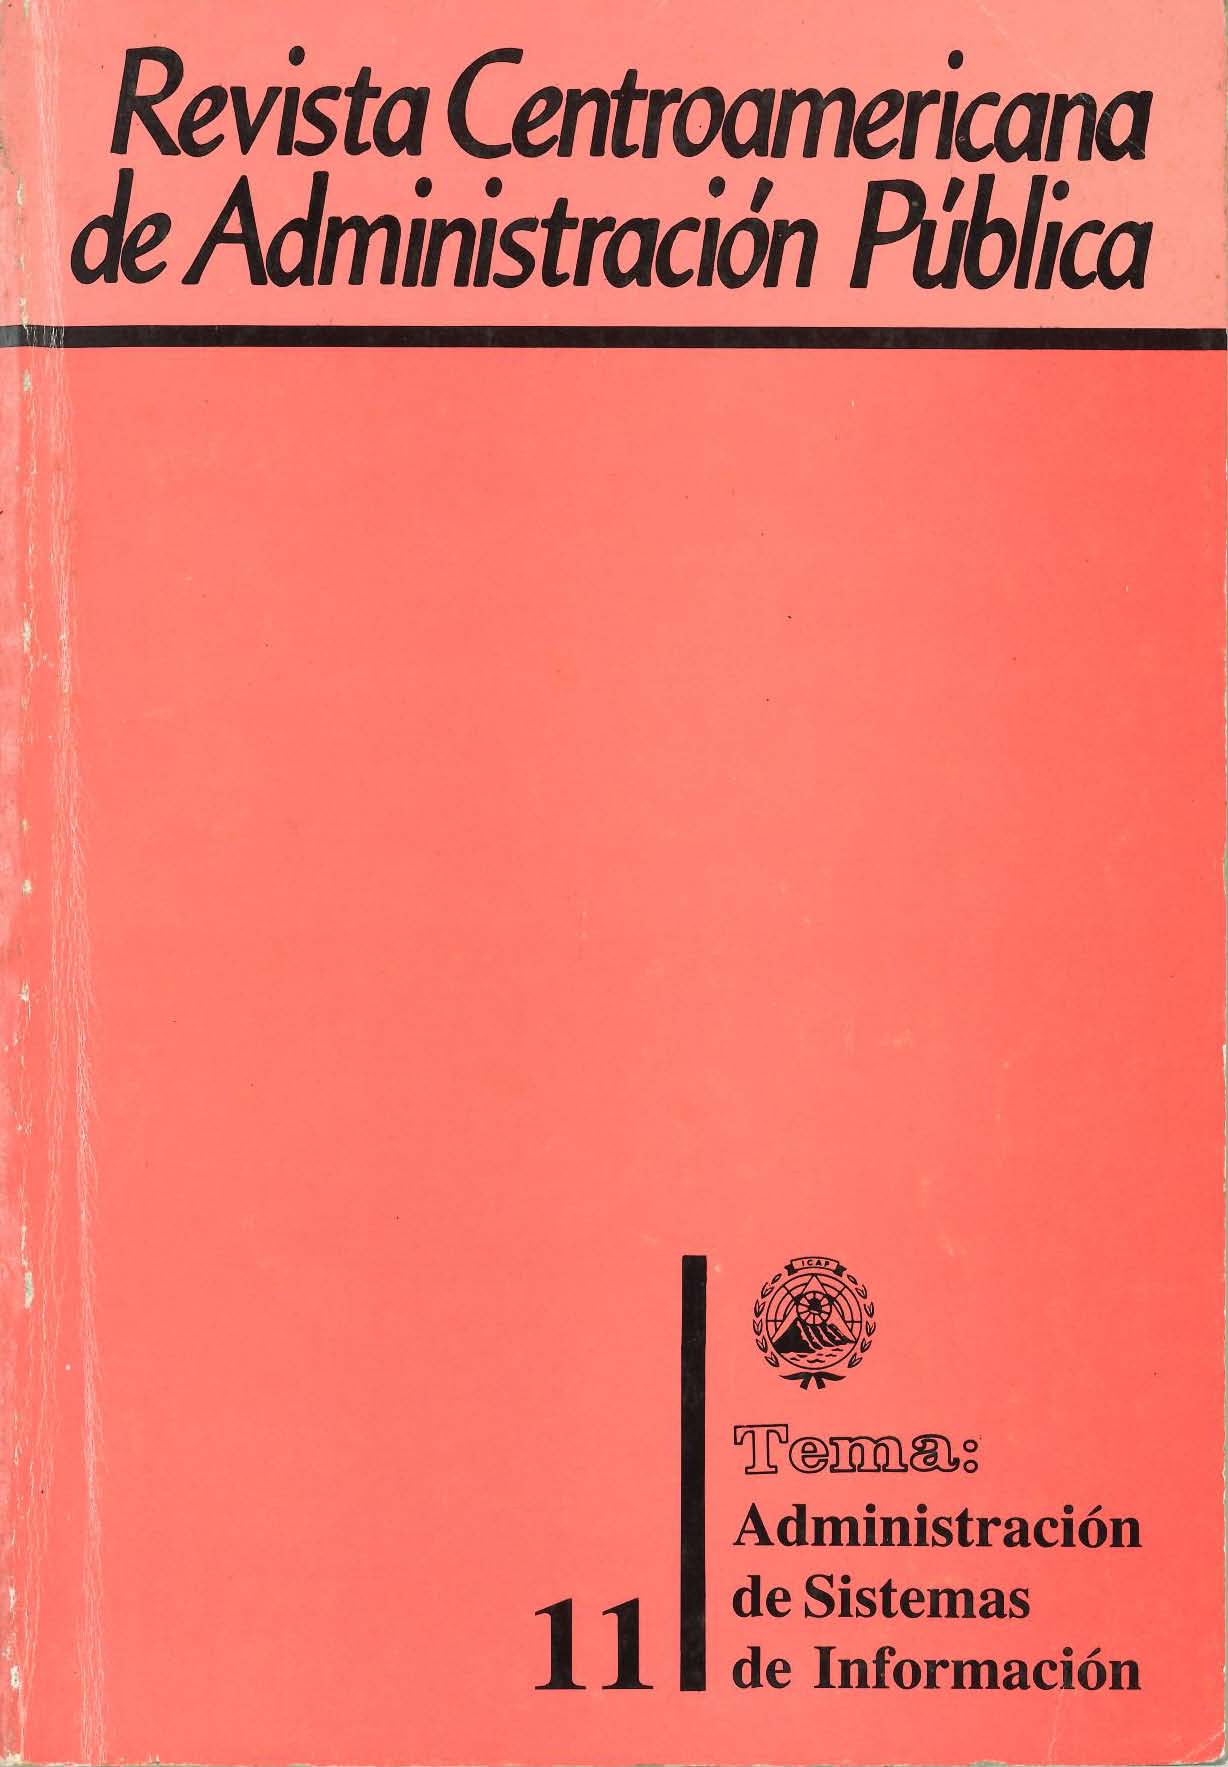 					Ver Núm. 11 (1986): Administración de Sistemas de Información
				